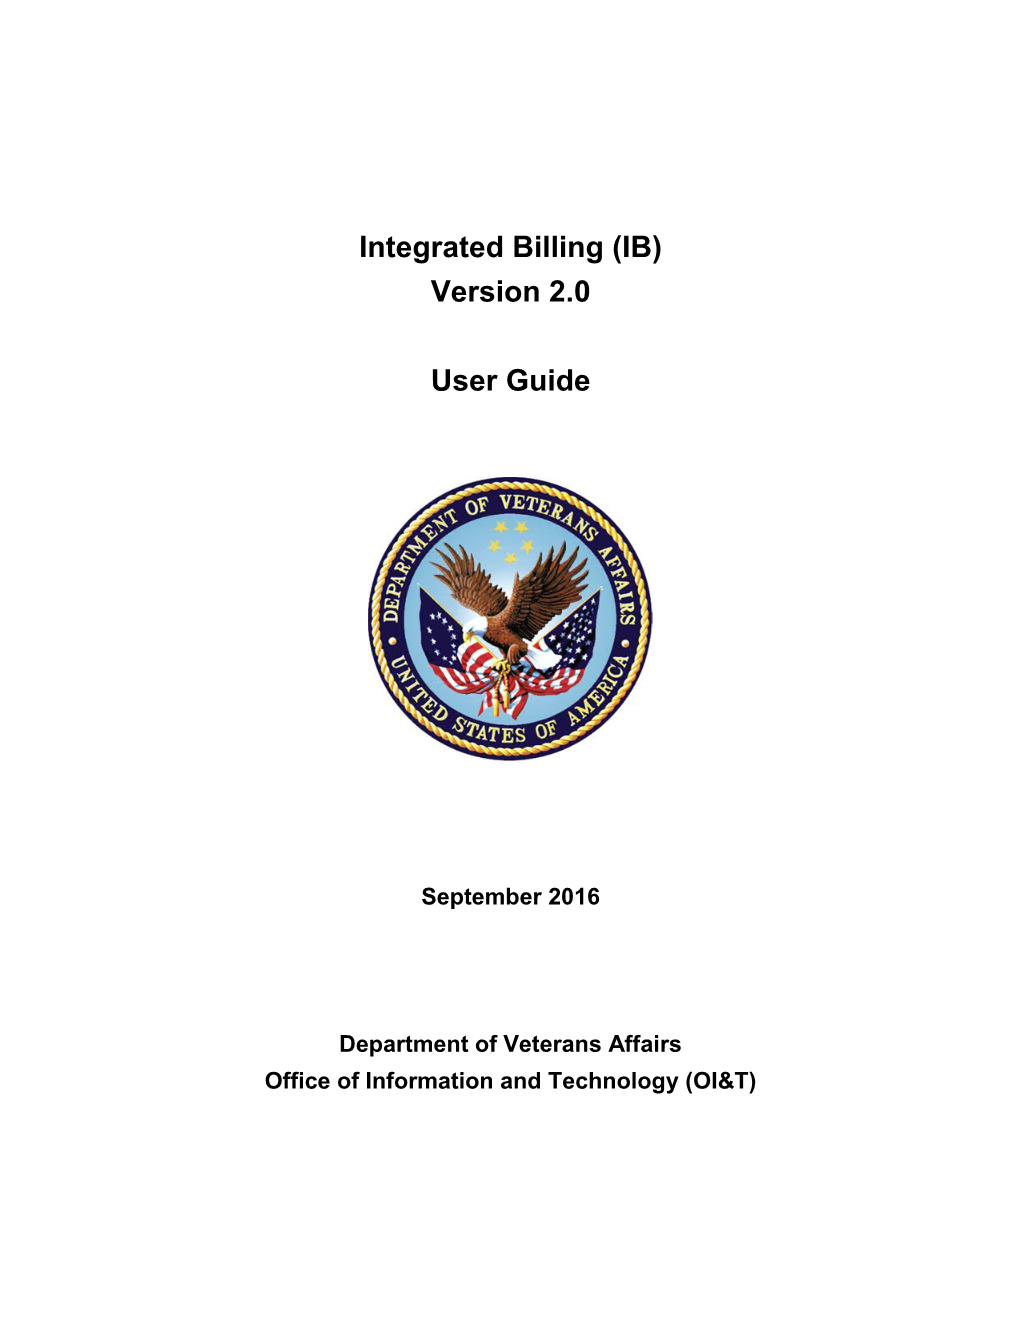 Integrated Billing (IB) Version 2.0 User Guide